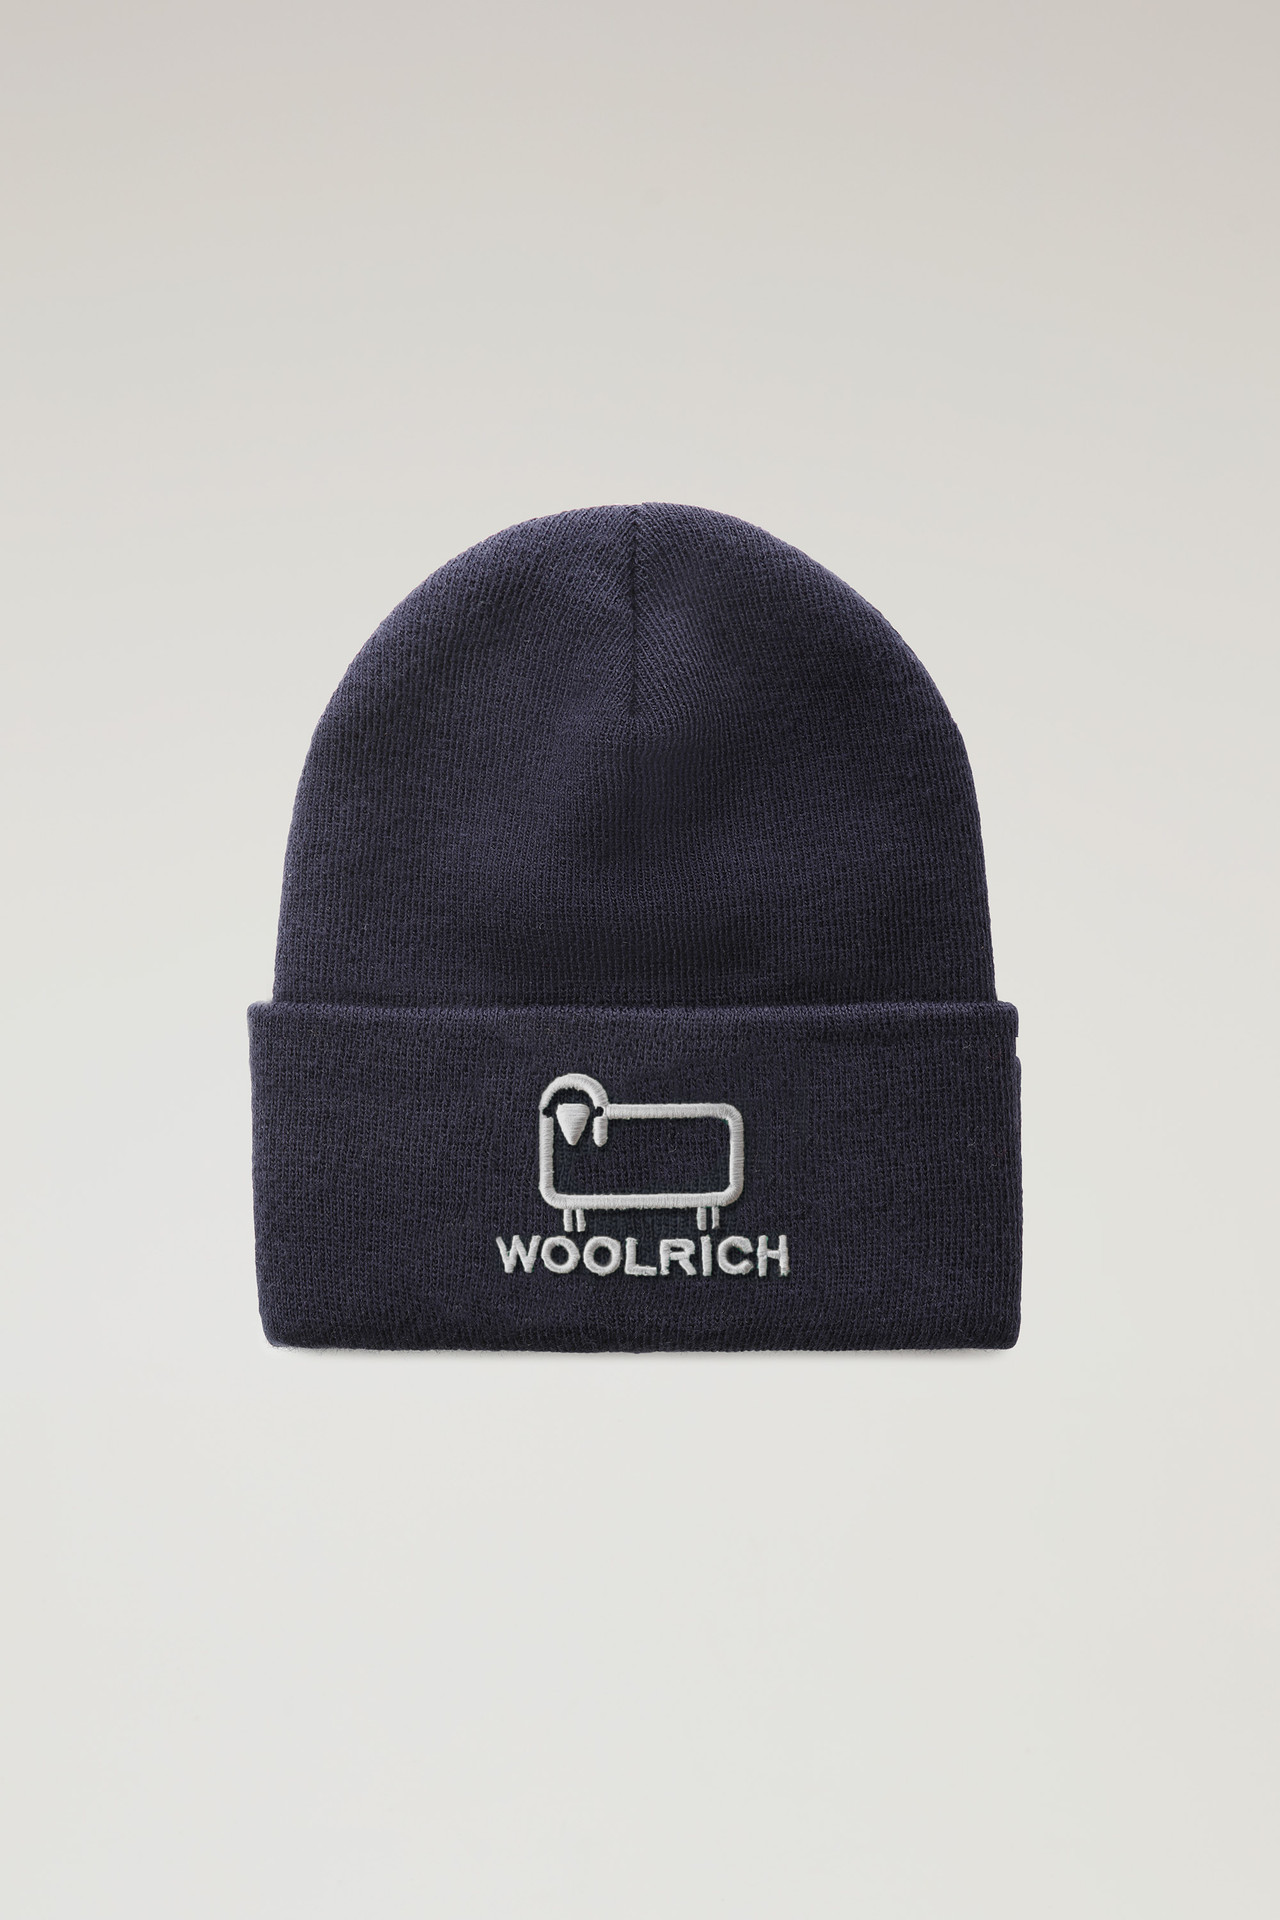 Woolrich – Muts – Blauw